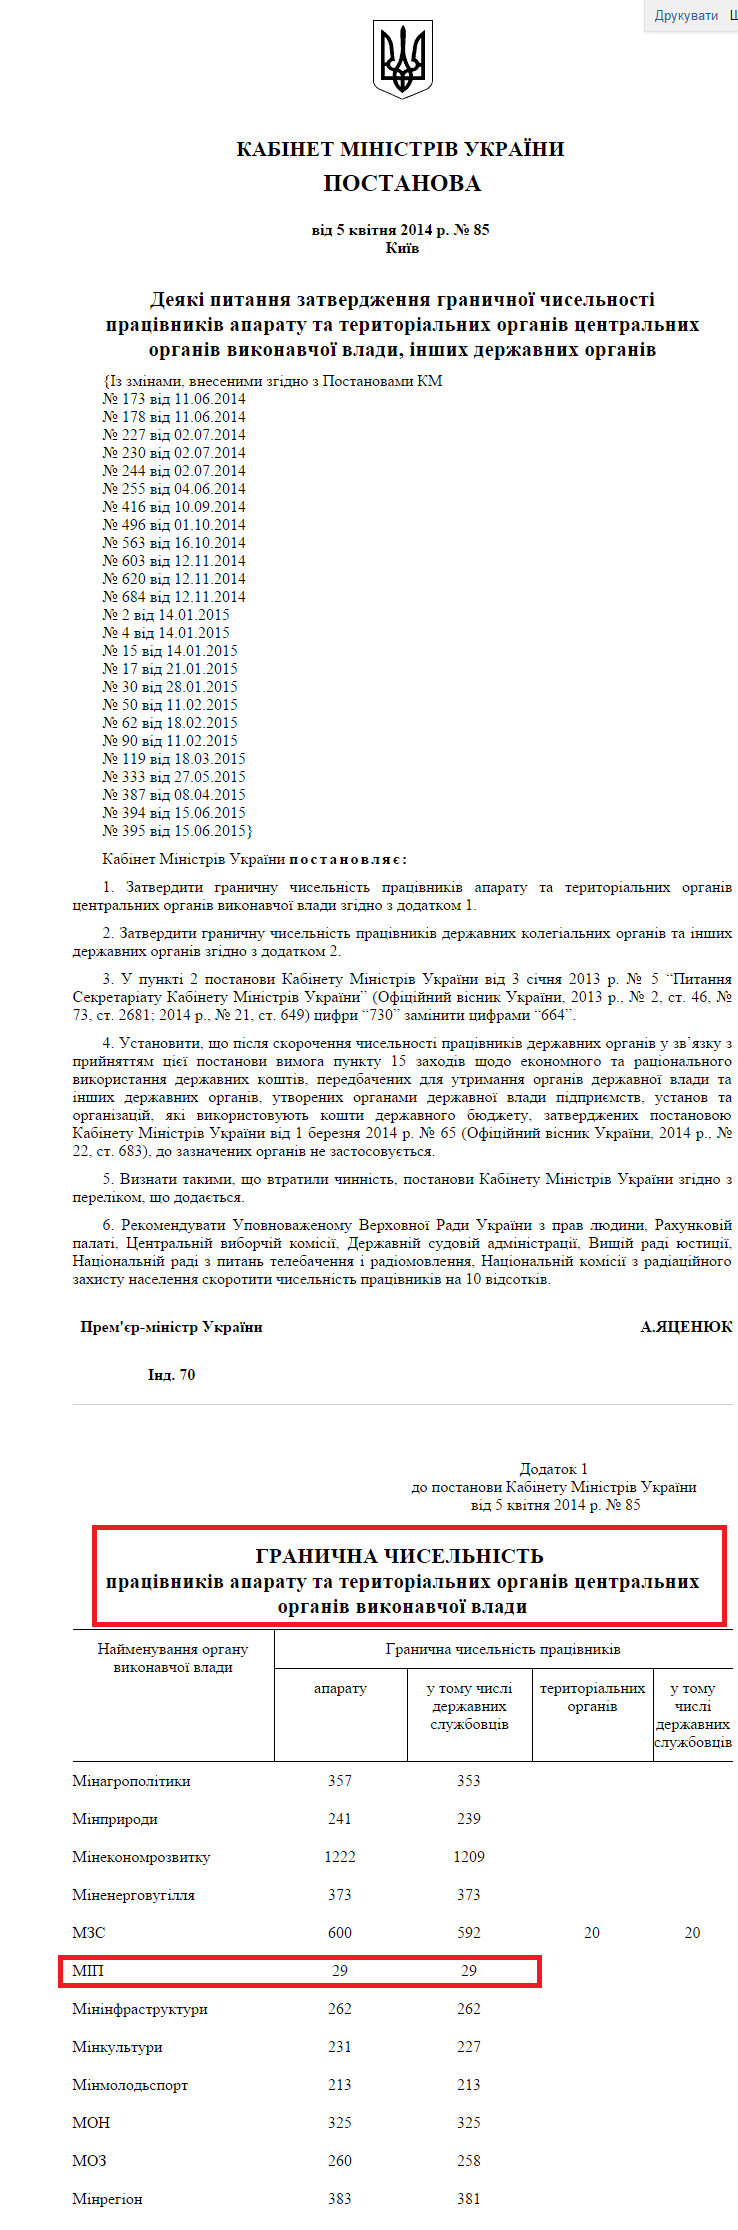 http://zakon4.rada.gov.ua/laws/show/85-2014-%D0%BF/print1433762307134809